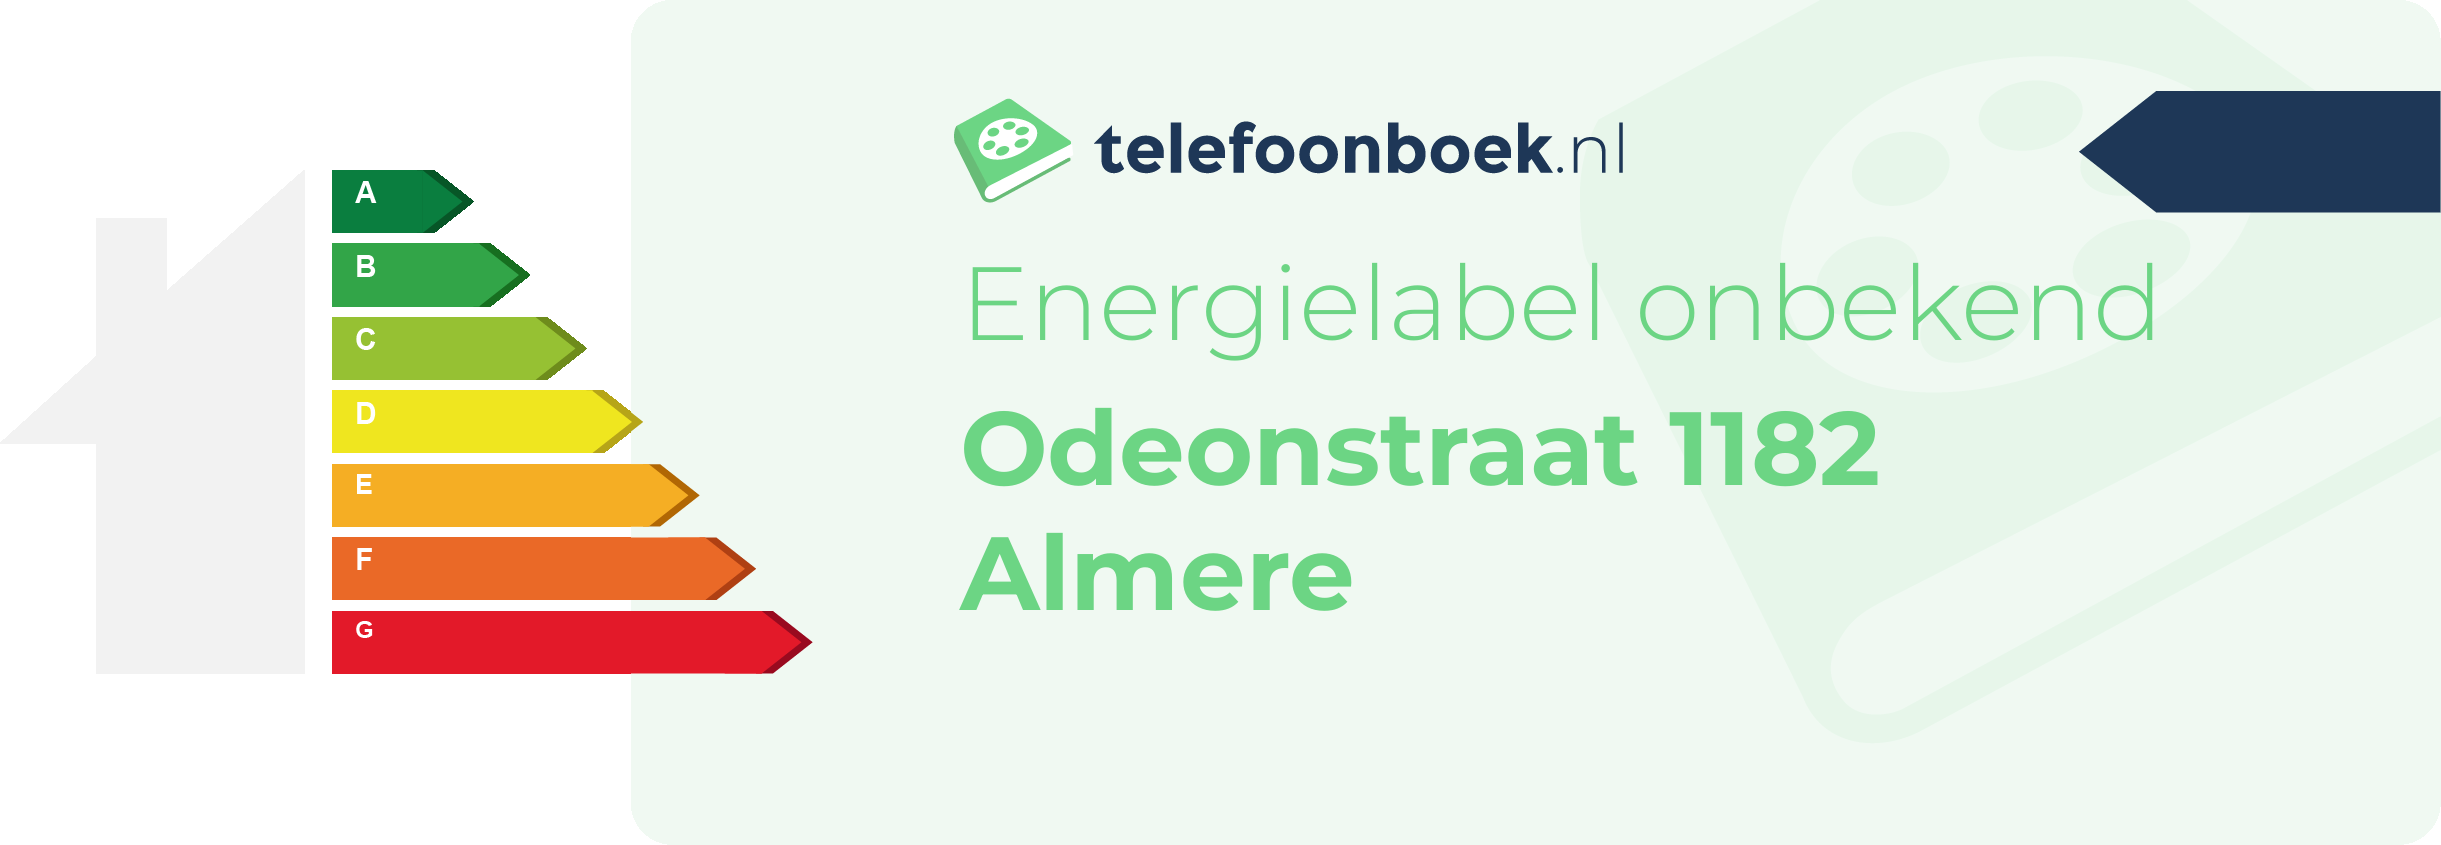 Energielabel Odeonstraat 1182 Almere